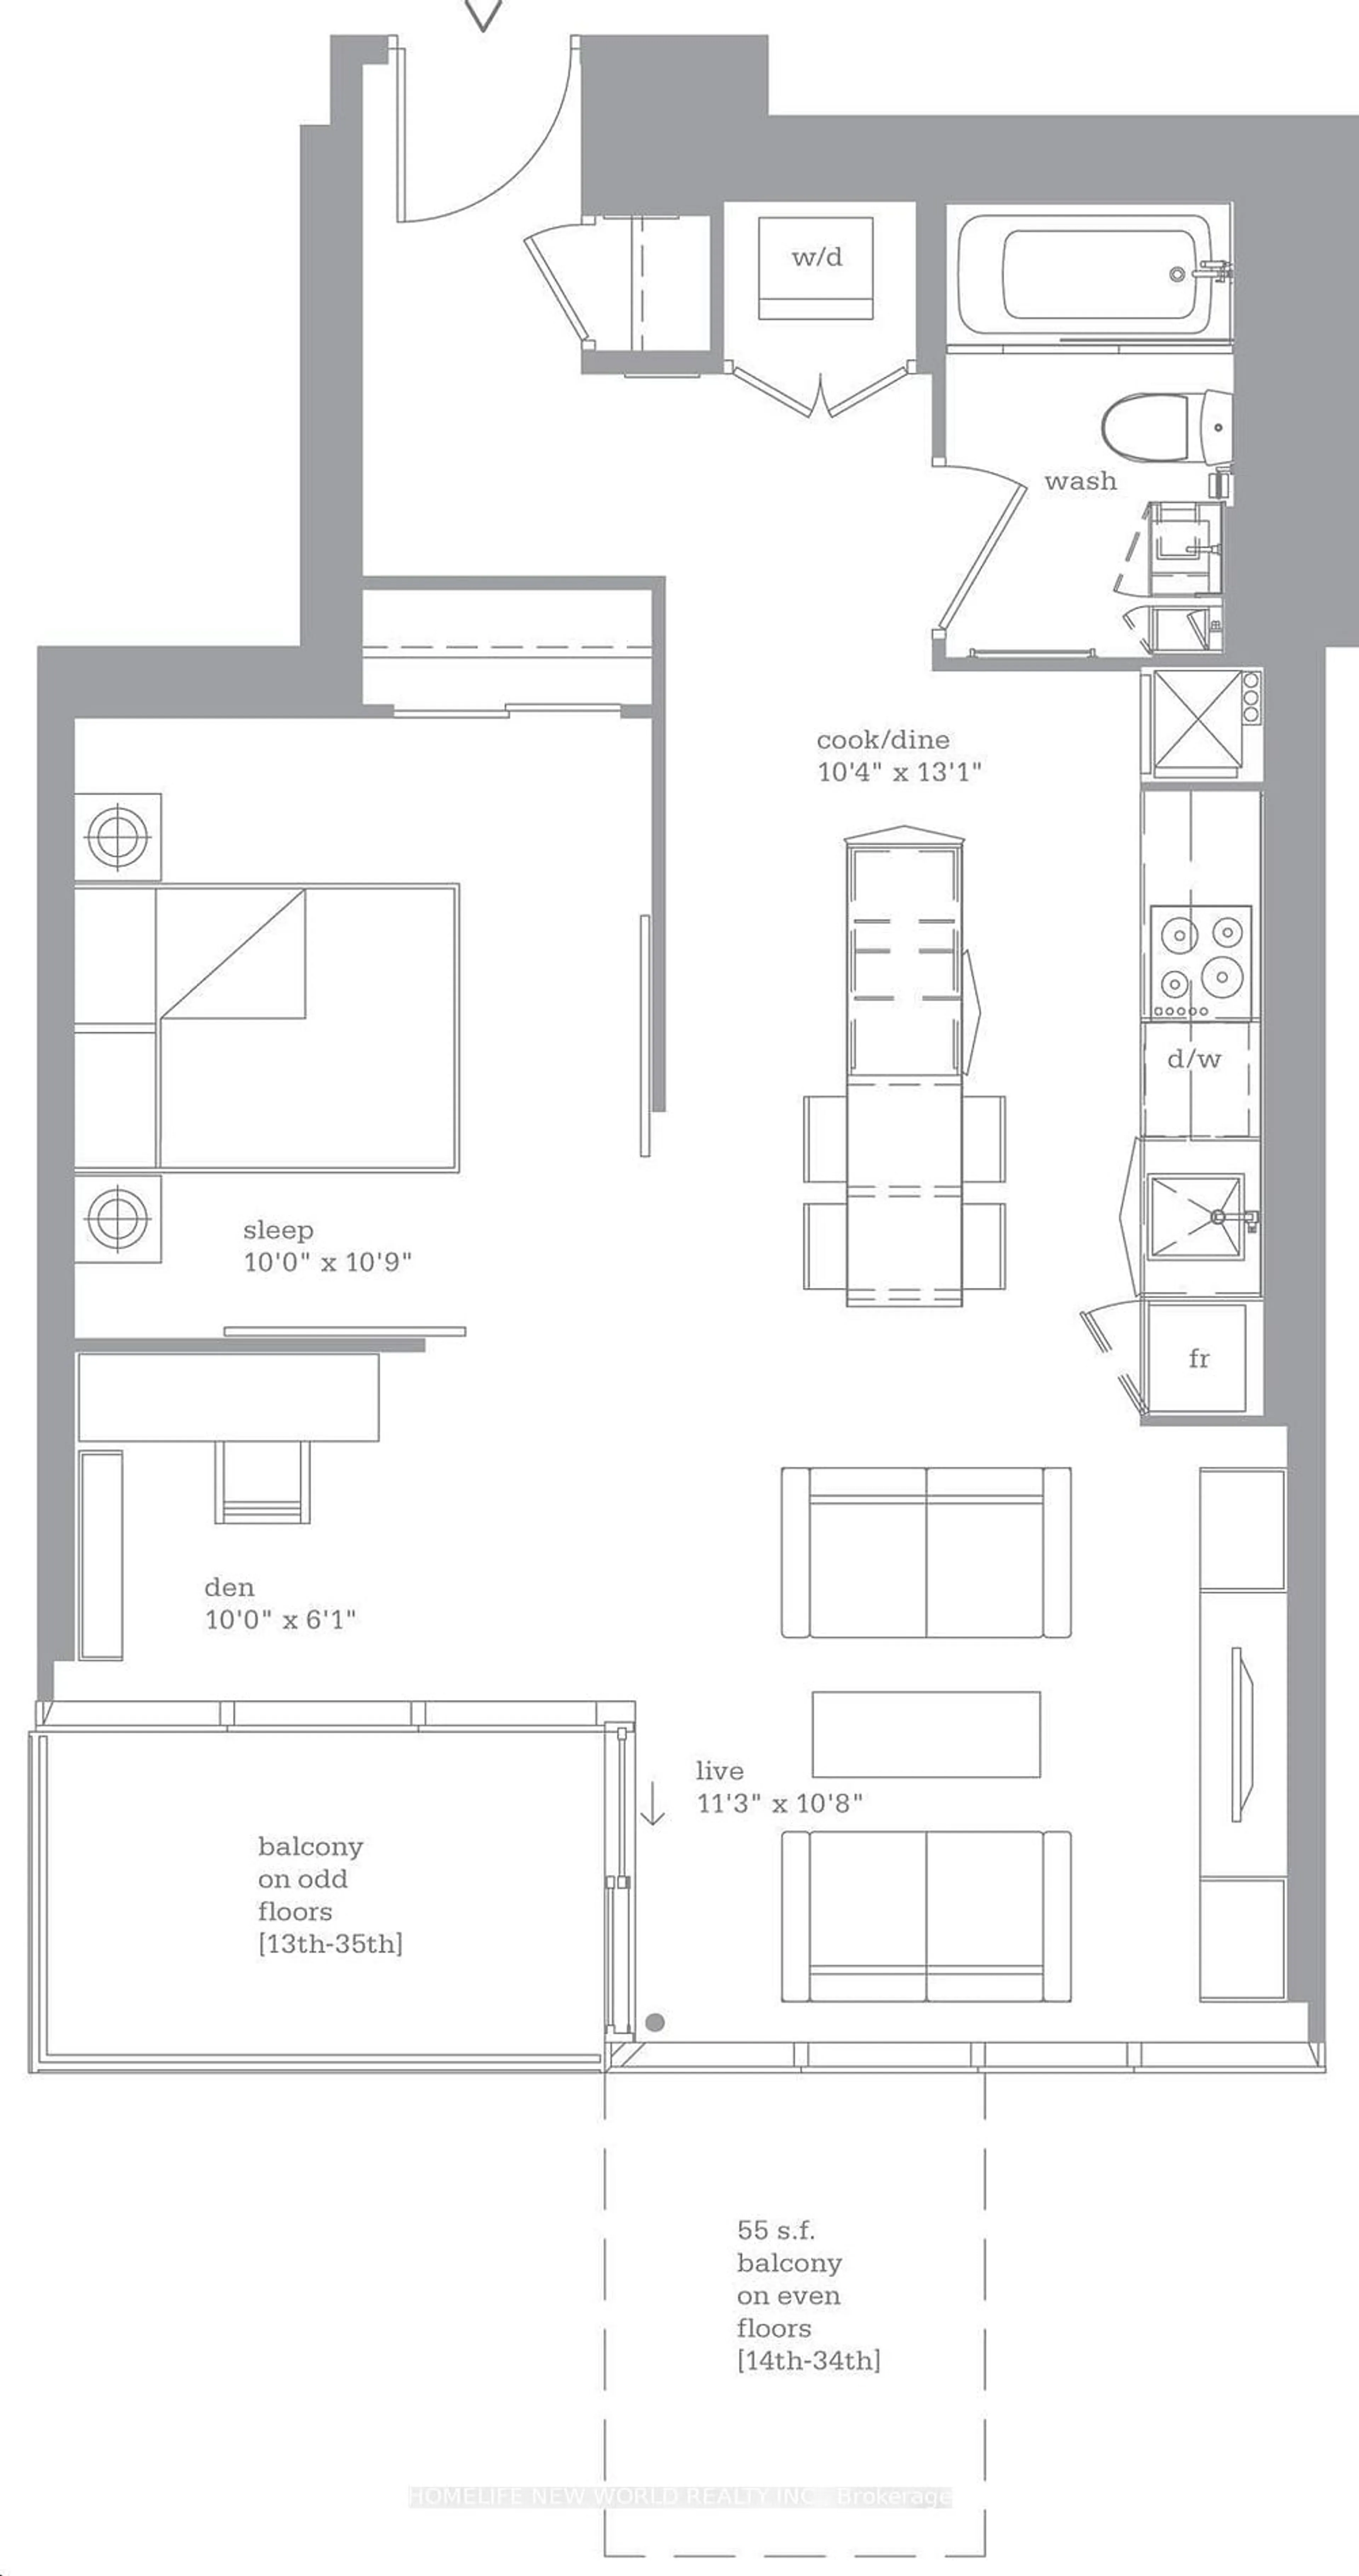 Floor plan for 16 Bonnycastle St #2606, Toronto Ontario M5A 4M6